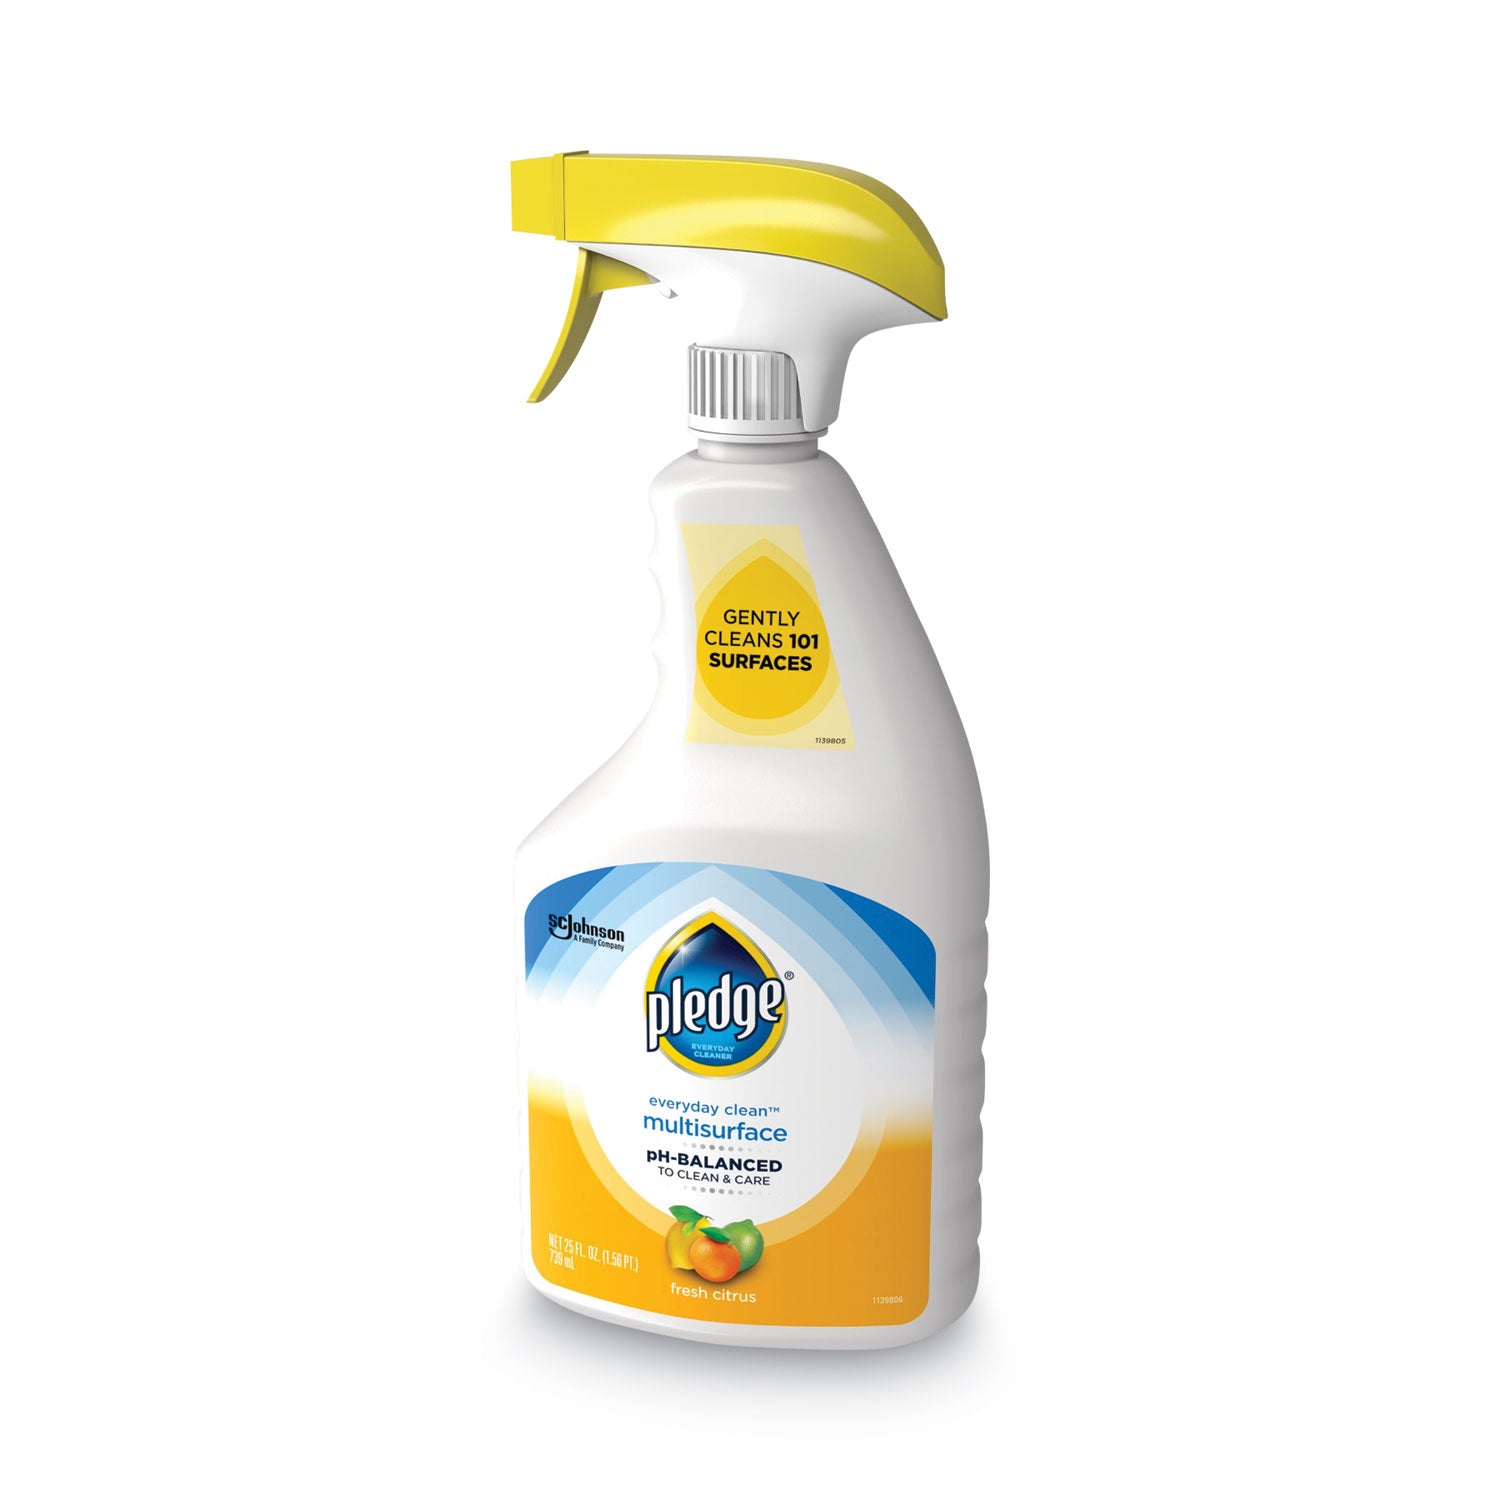 ph-balanced-everyday-clean-multisurface-cleaner-clean-citrus-scent-25-oz-trigger-spray-bottle-6-carton_sjn336283 - 2